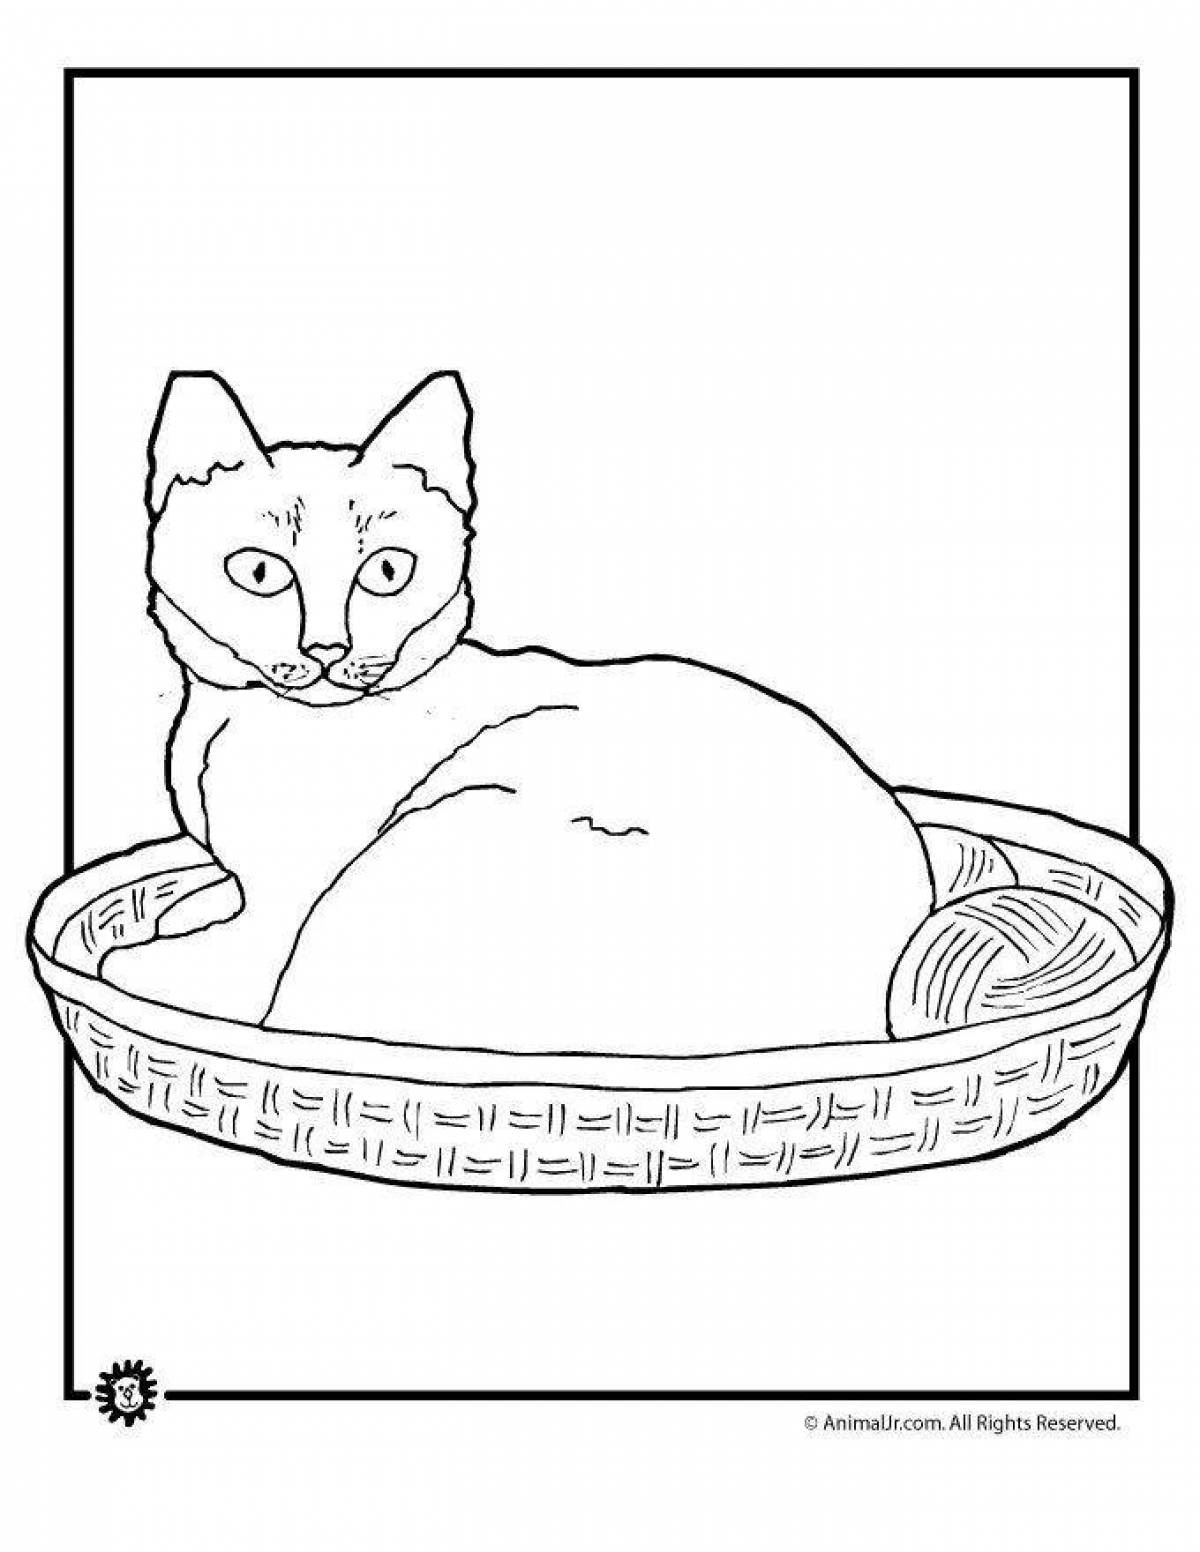 Котята в корзинке #4